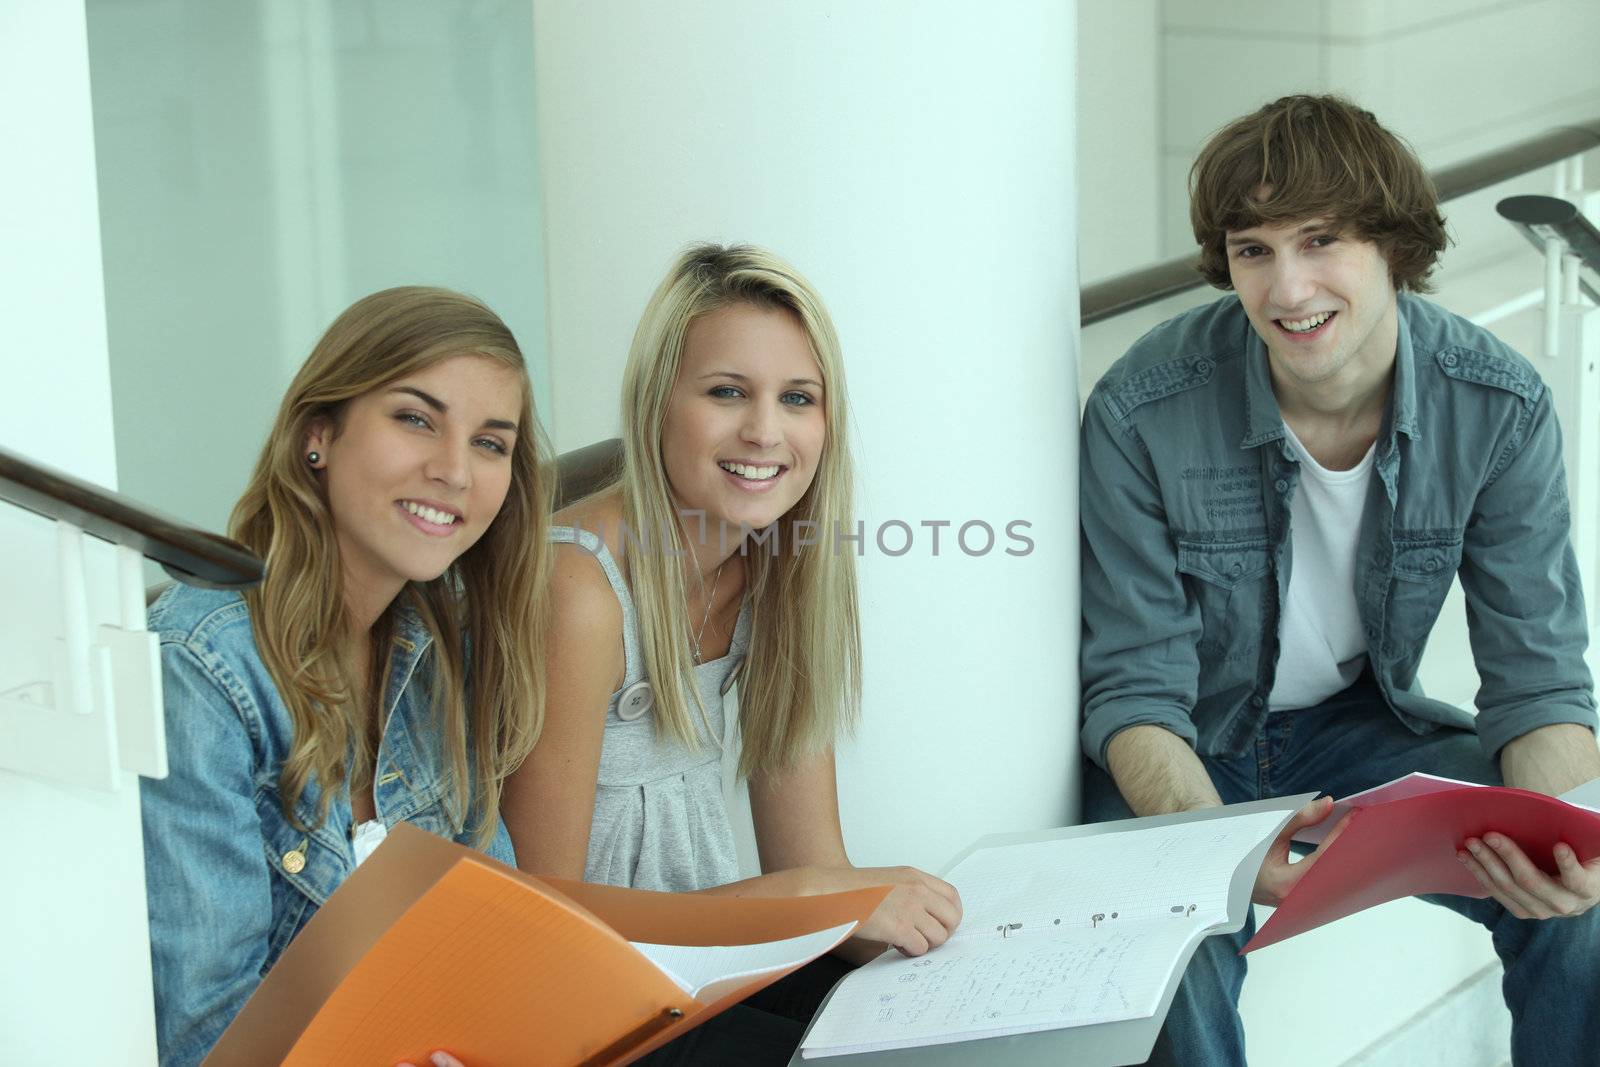 Teens doing homework by phovoir